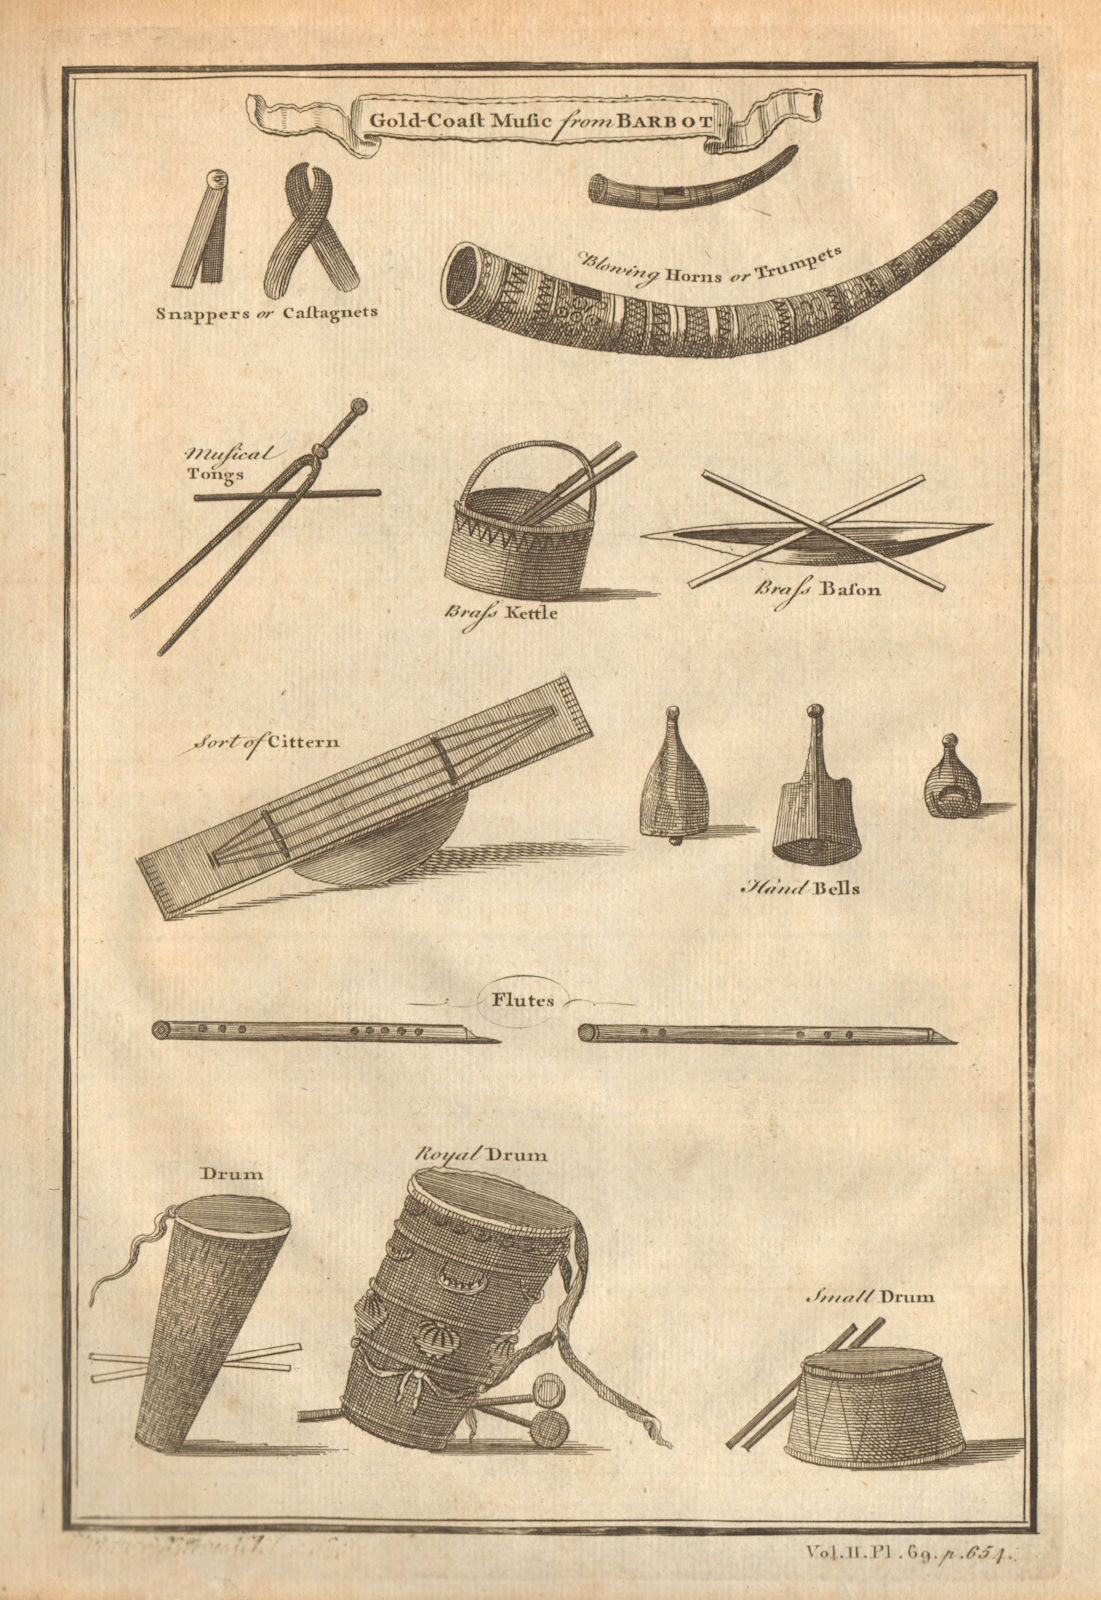 Associate Product Gold Coast musical instruments. Ghana 1745 antique vintage print picture